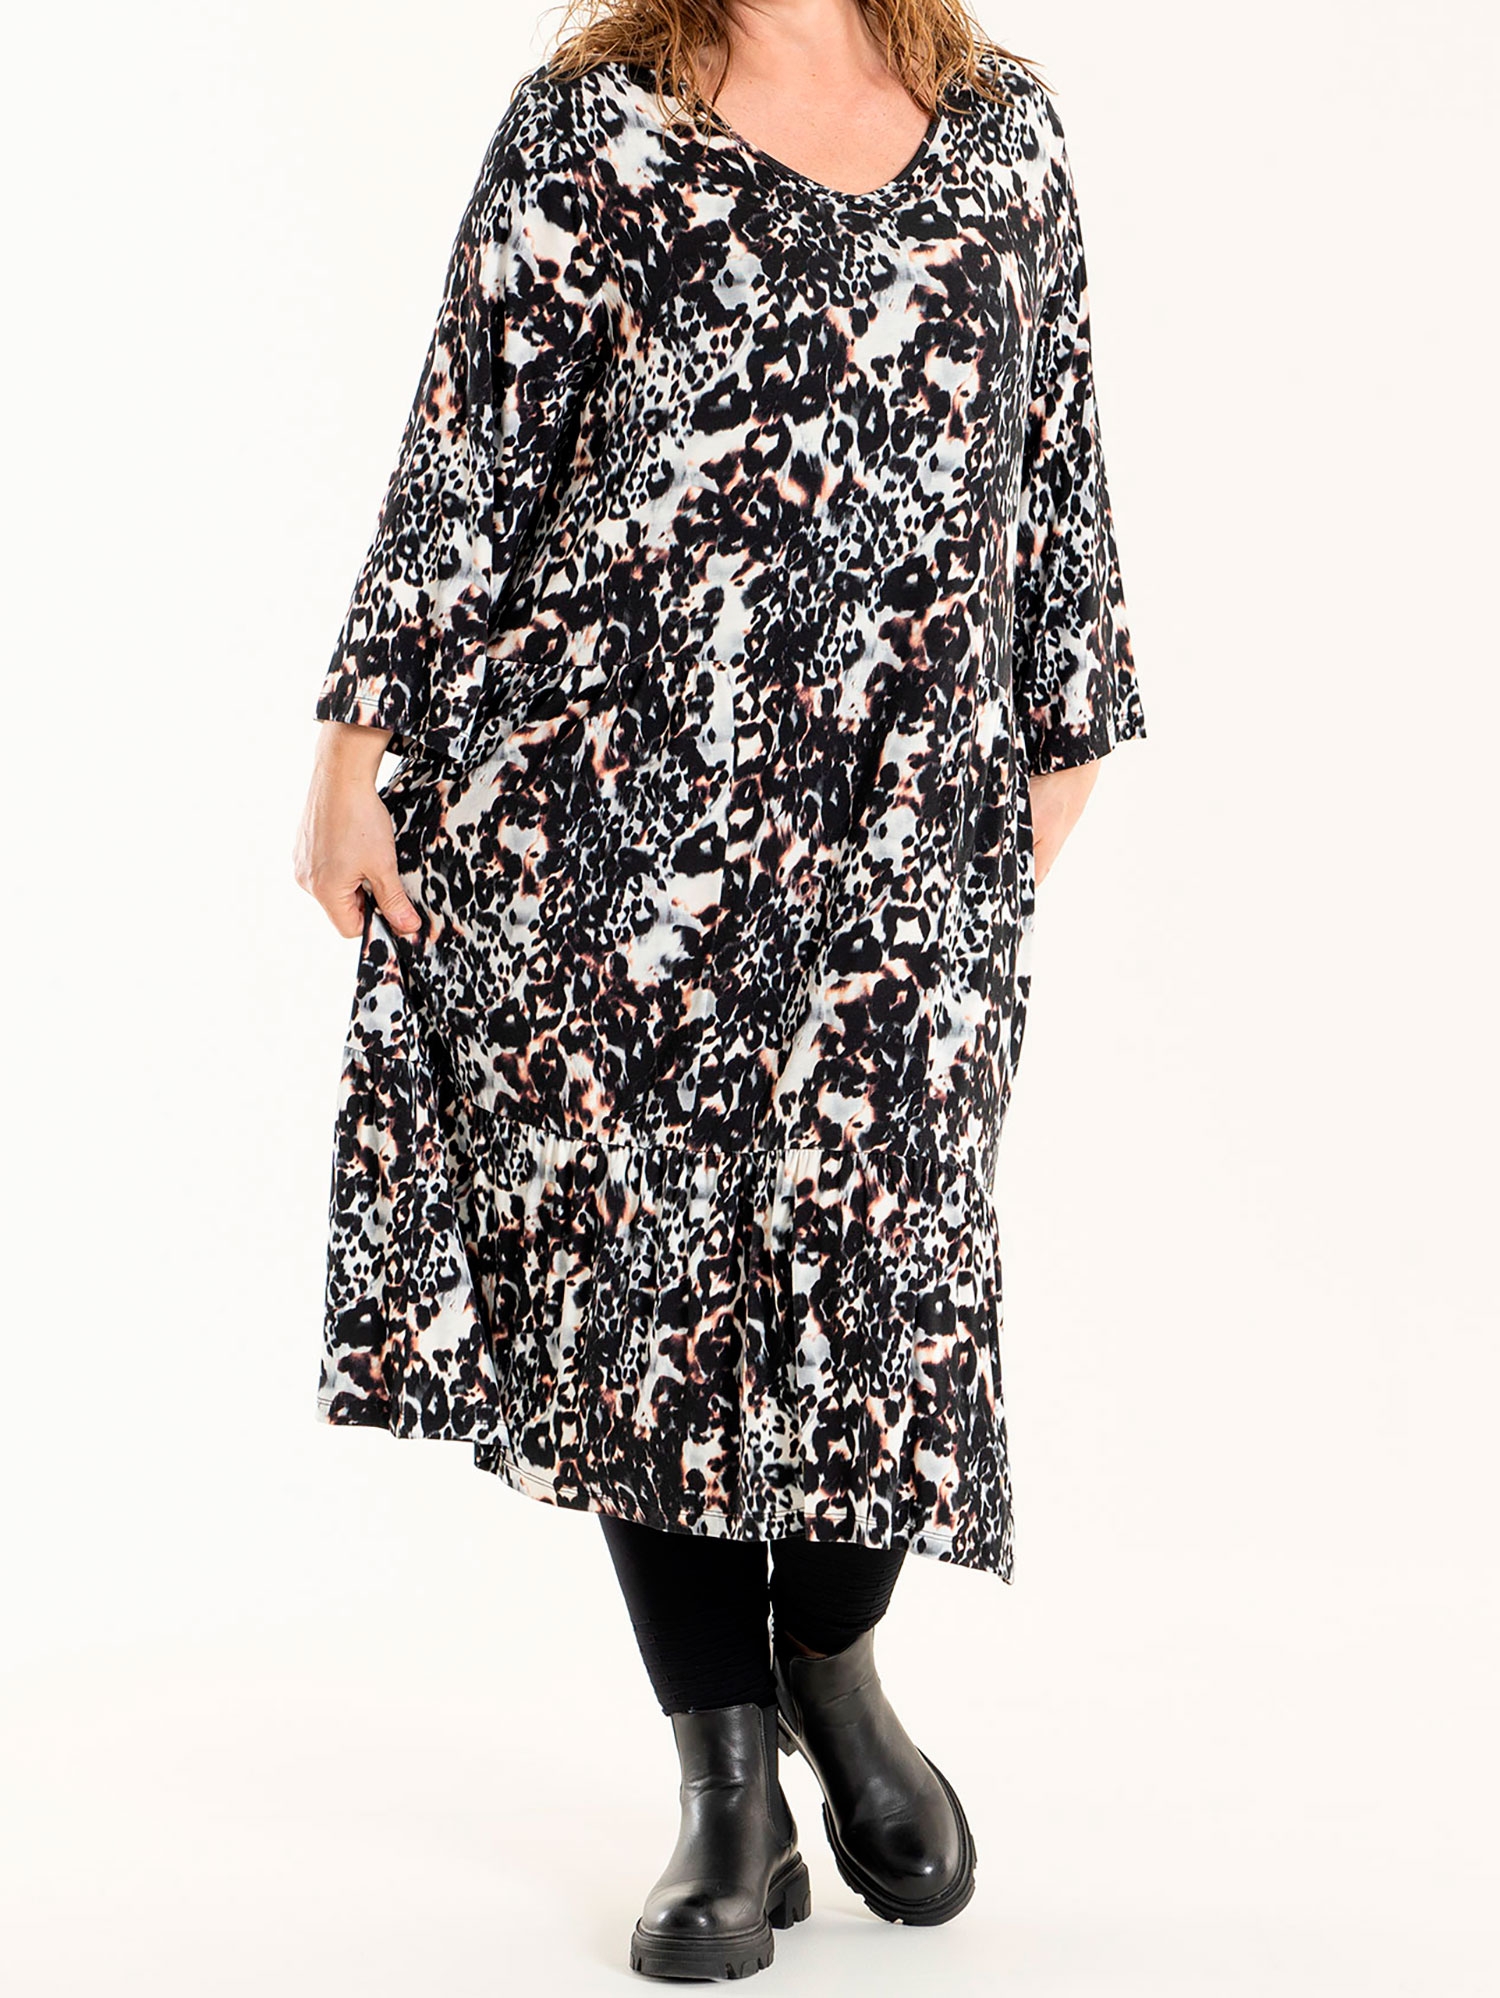 STEFANIE - Printet kjole i viskose jersey fra Gozzip